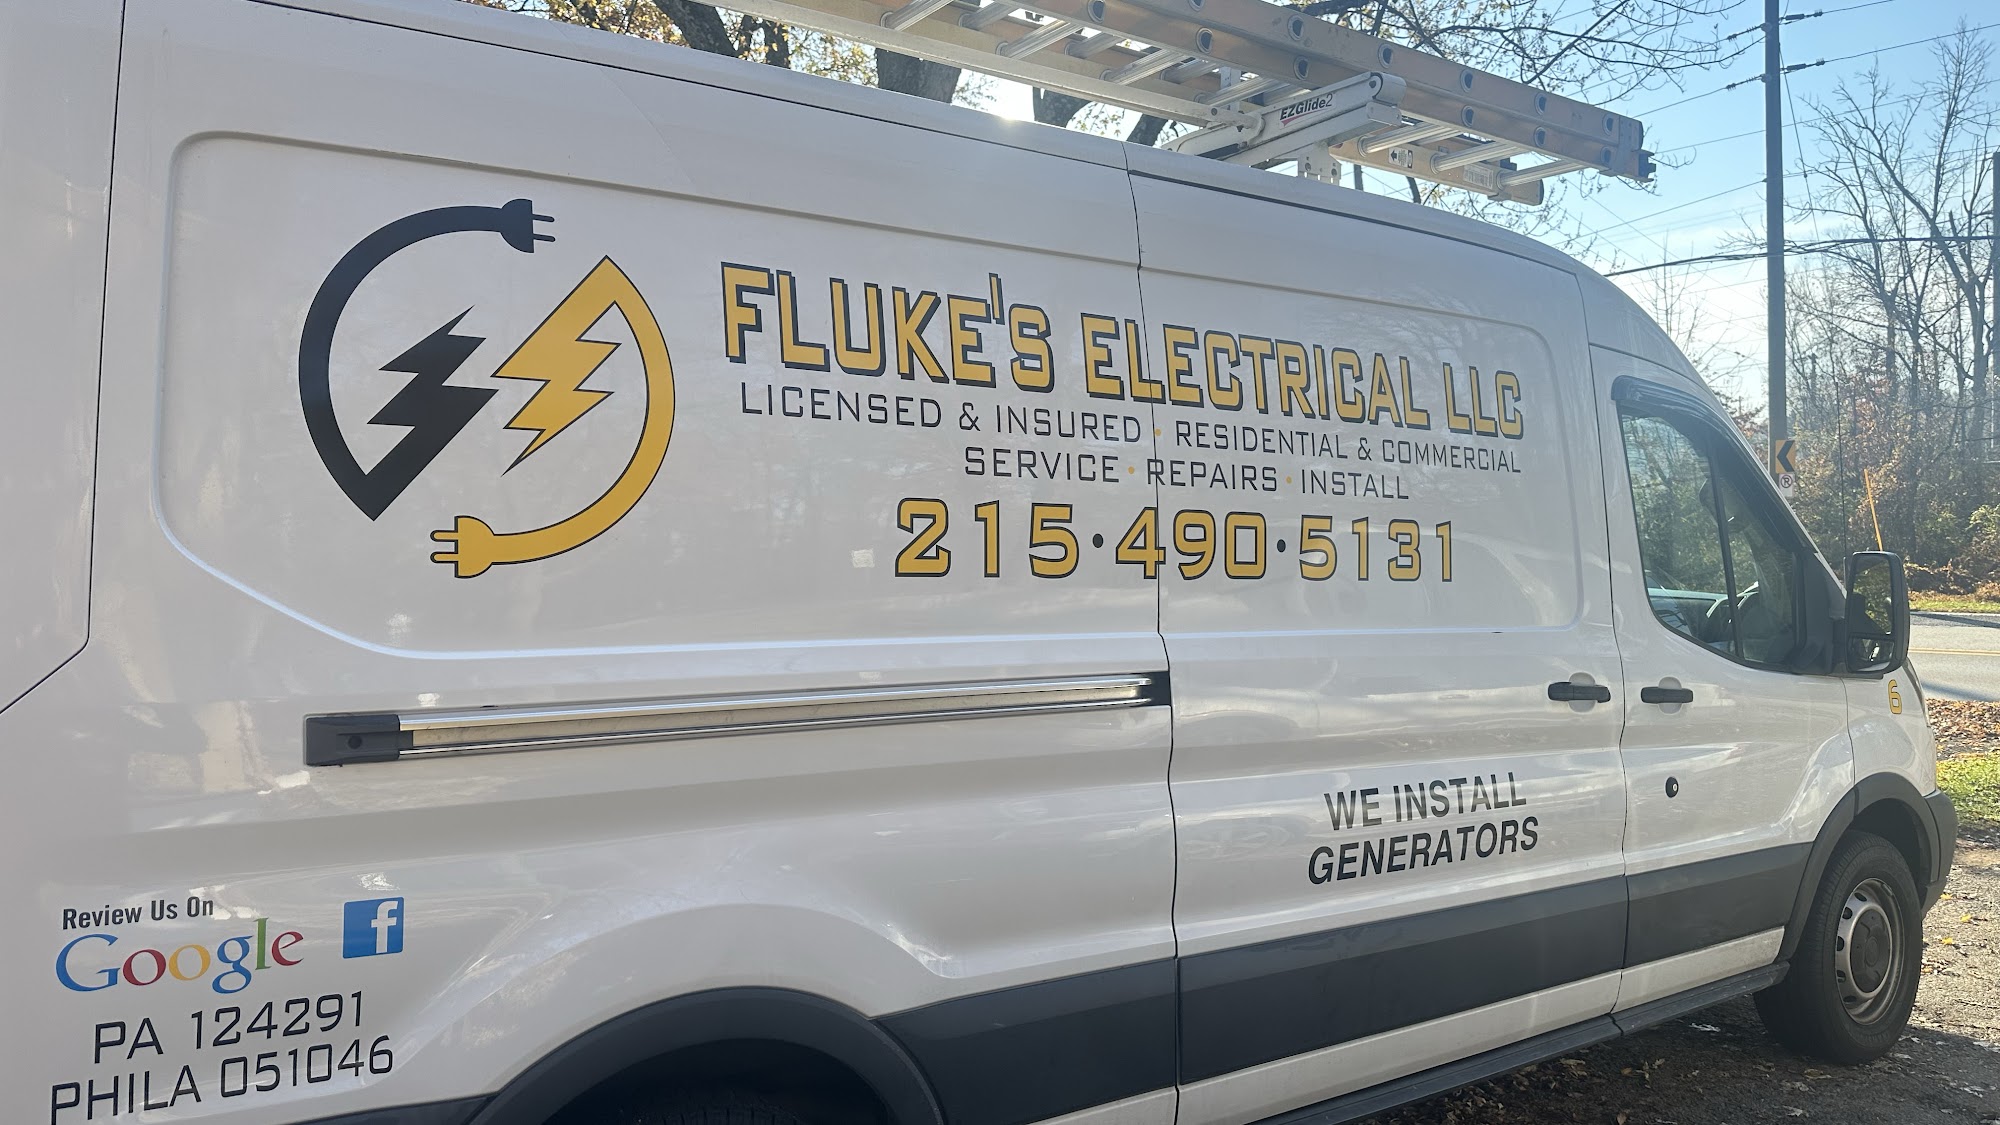 Fluke's Electrical LLC